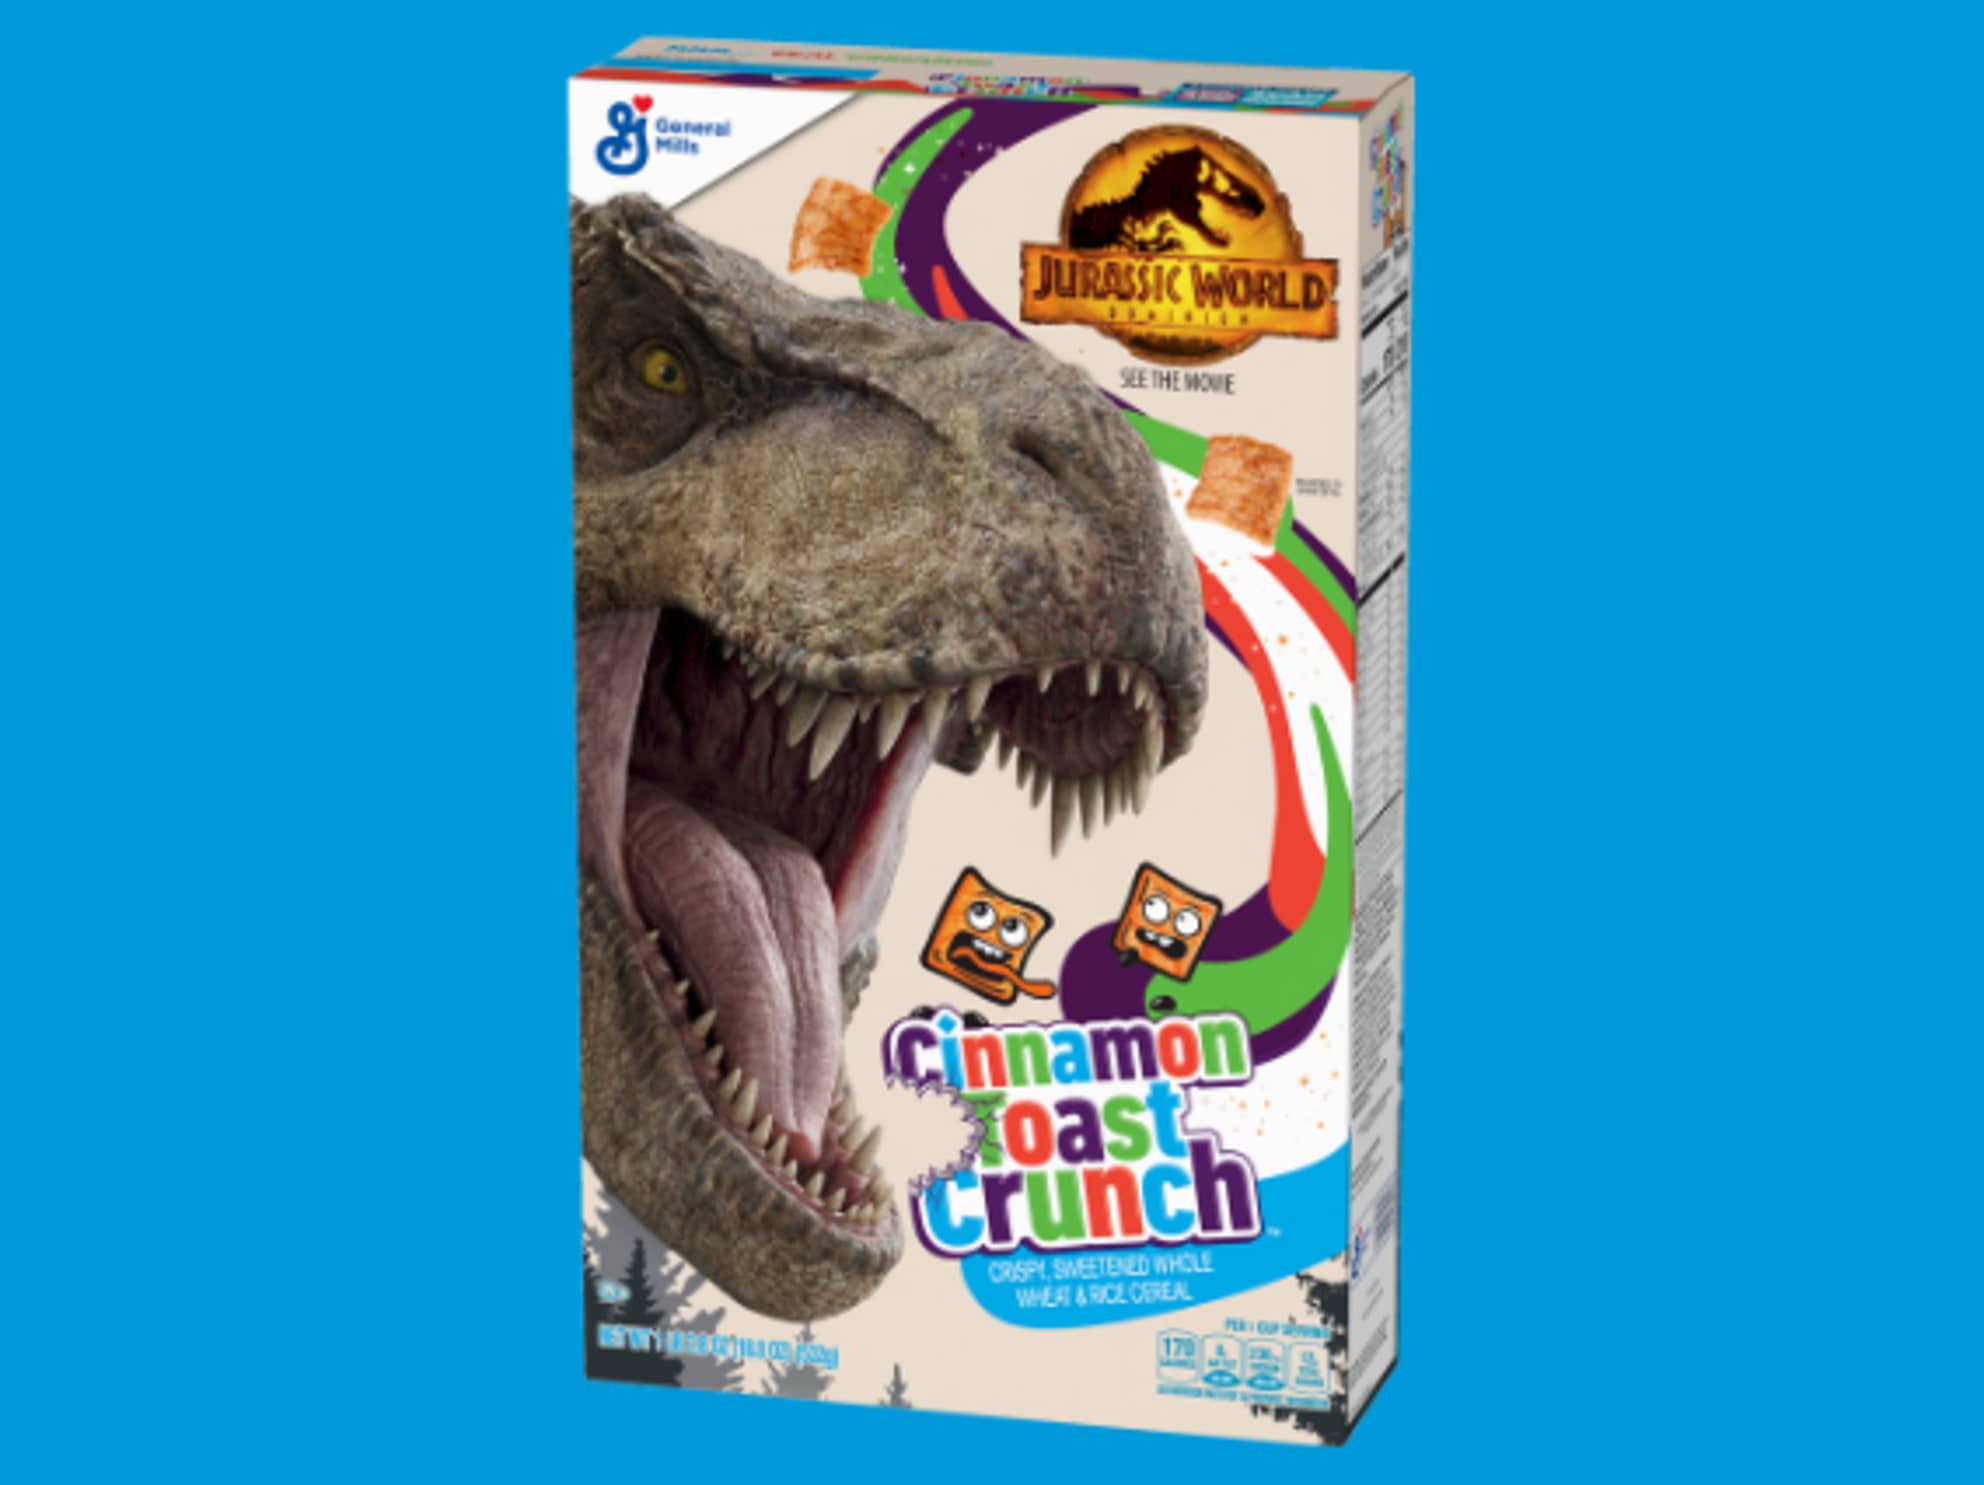 Jurassic World Cinnamon Toast Crunch box